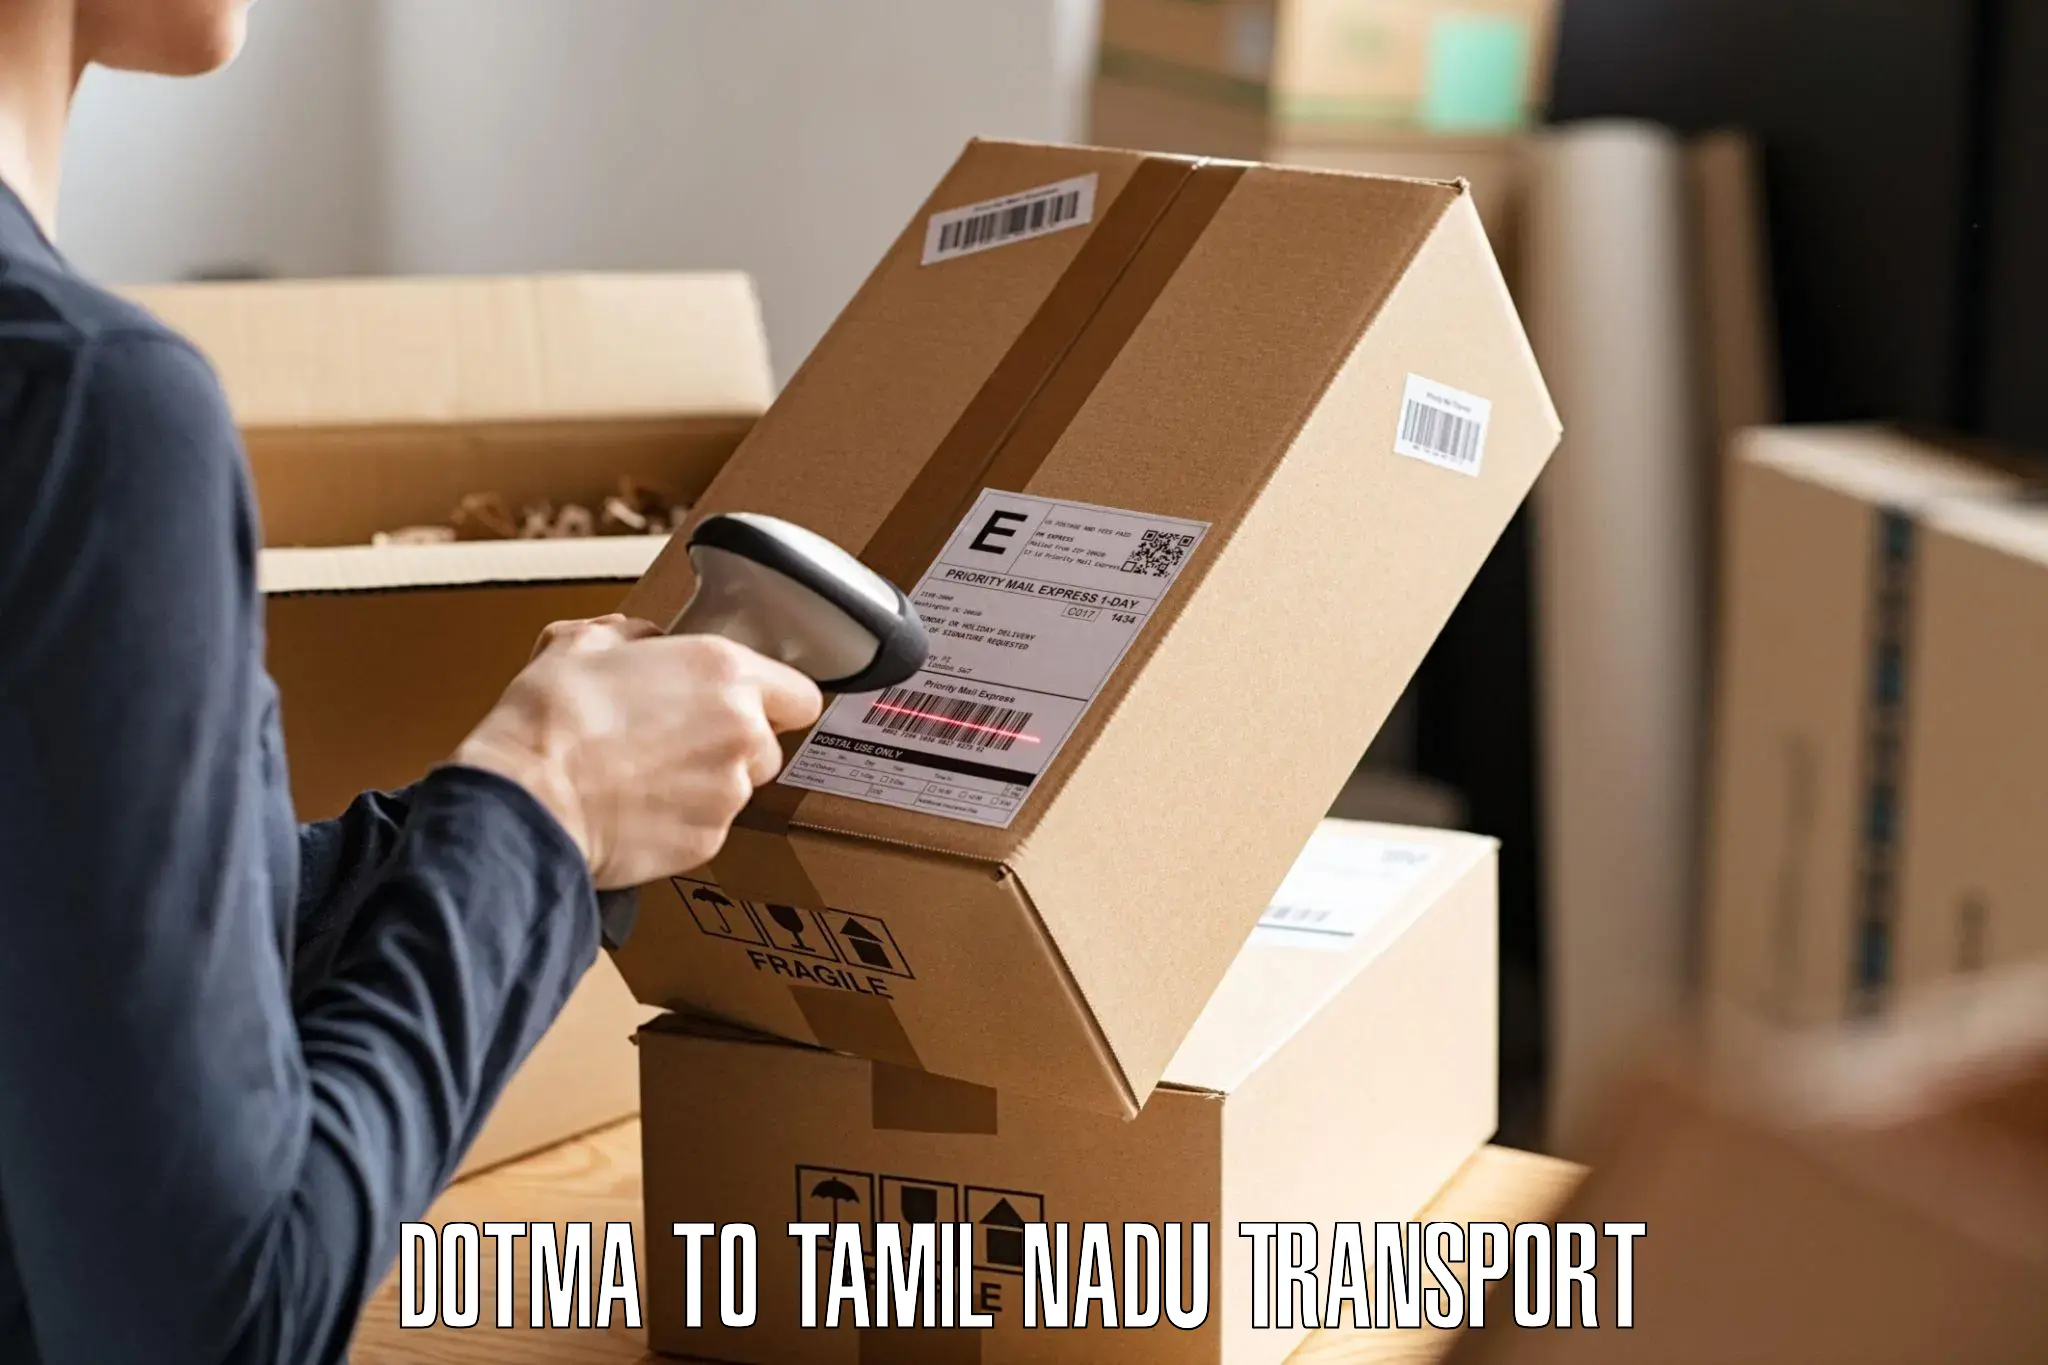 Furniture transport service Dotma to Devakottai